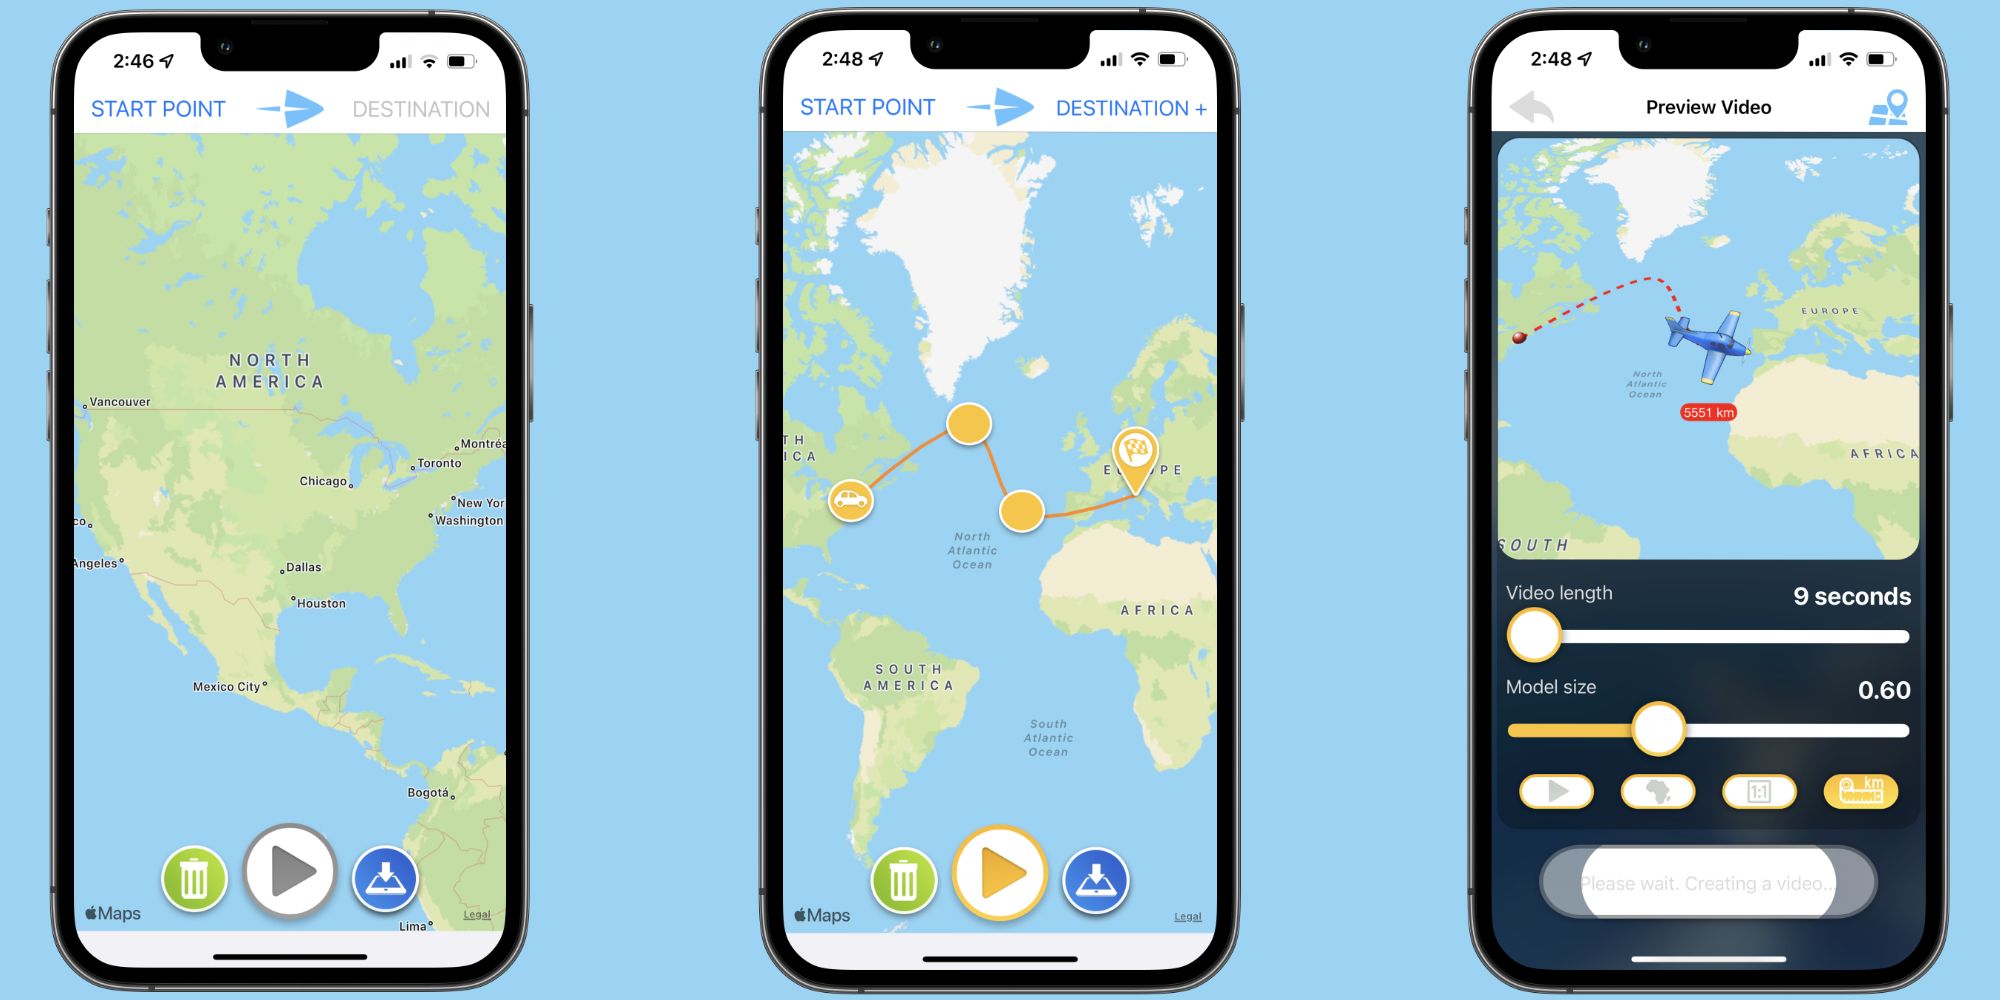 Travel Boast App: How To Make Fun Travel Videos For Social Media